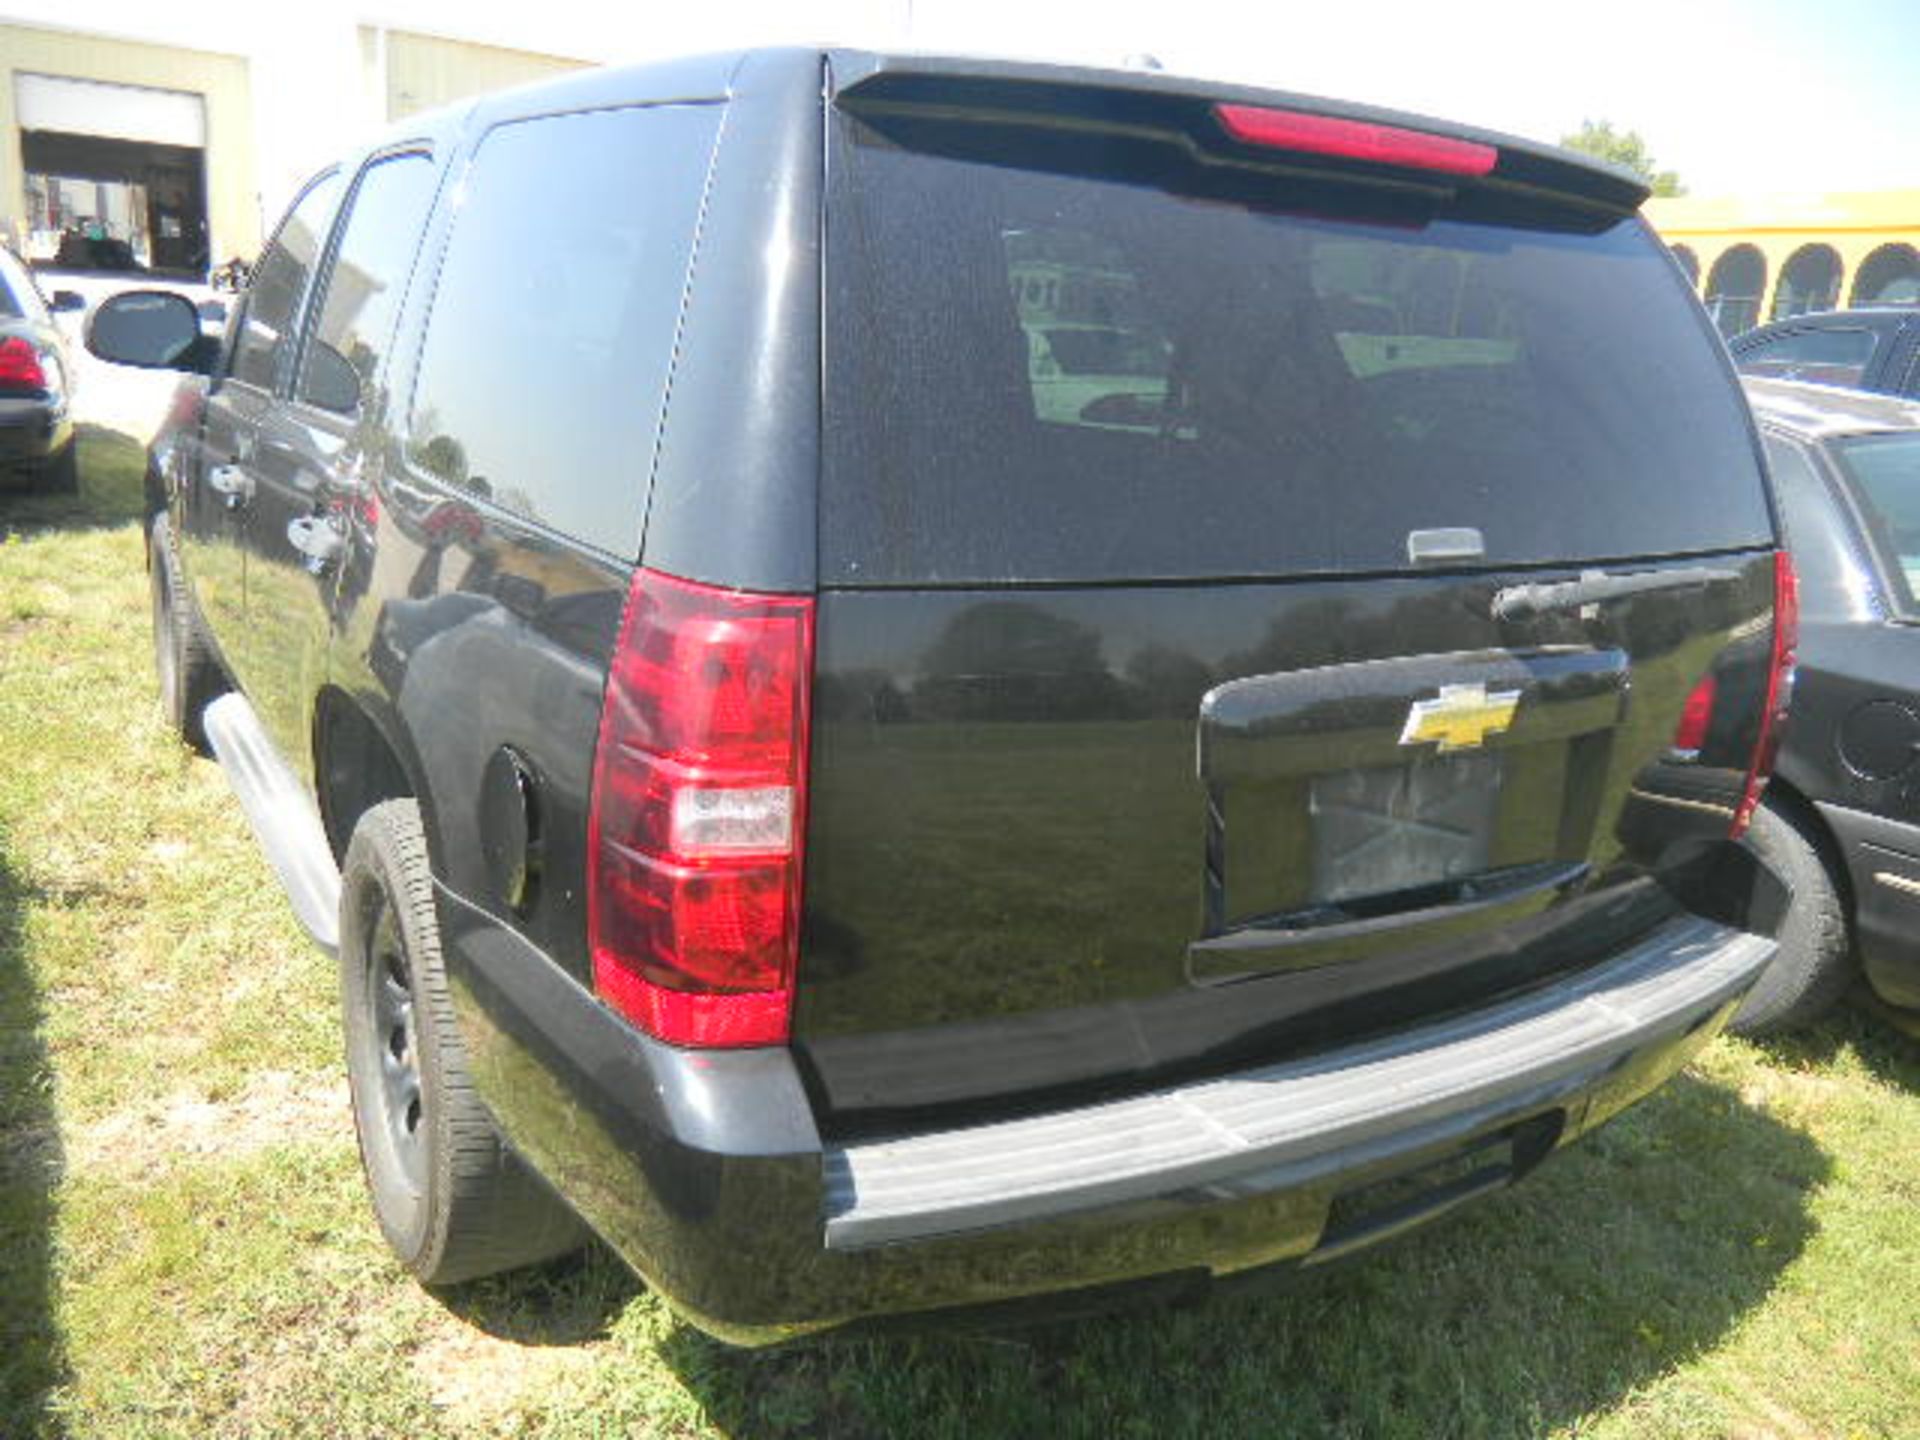 2010 Chevrolet Tahoe Black Patrol SUV - Asset I.D. #259 - Last of Vin (220846) - Image 5 of 9